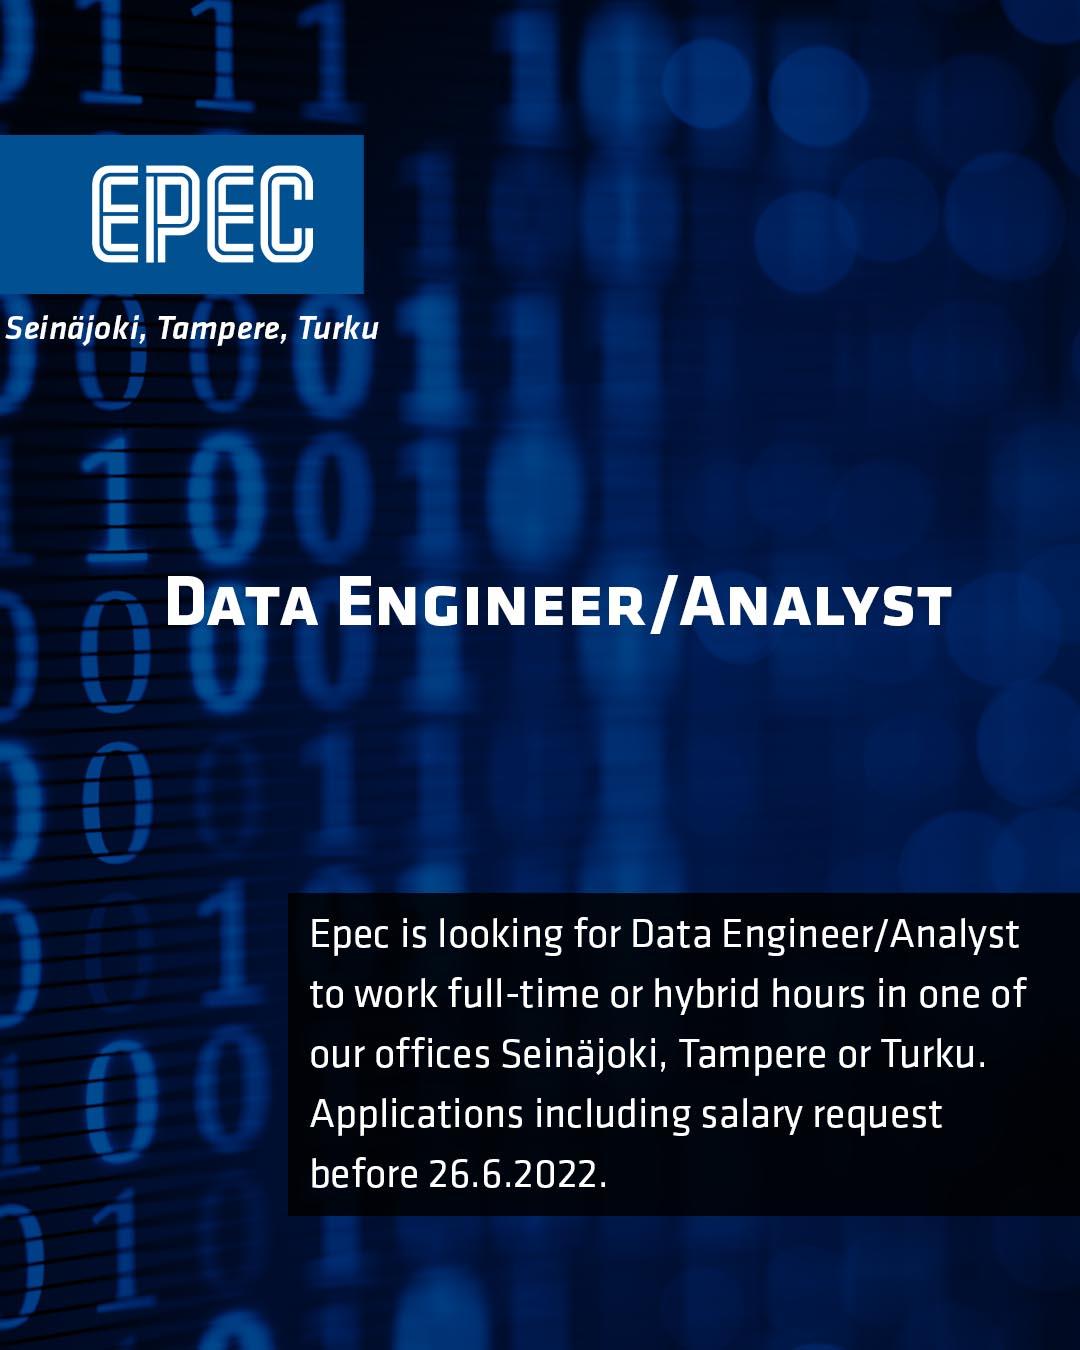 Data Engineer, analyst